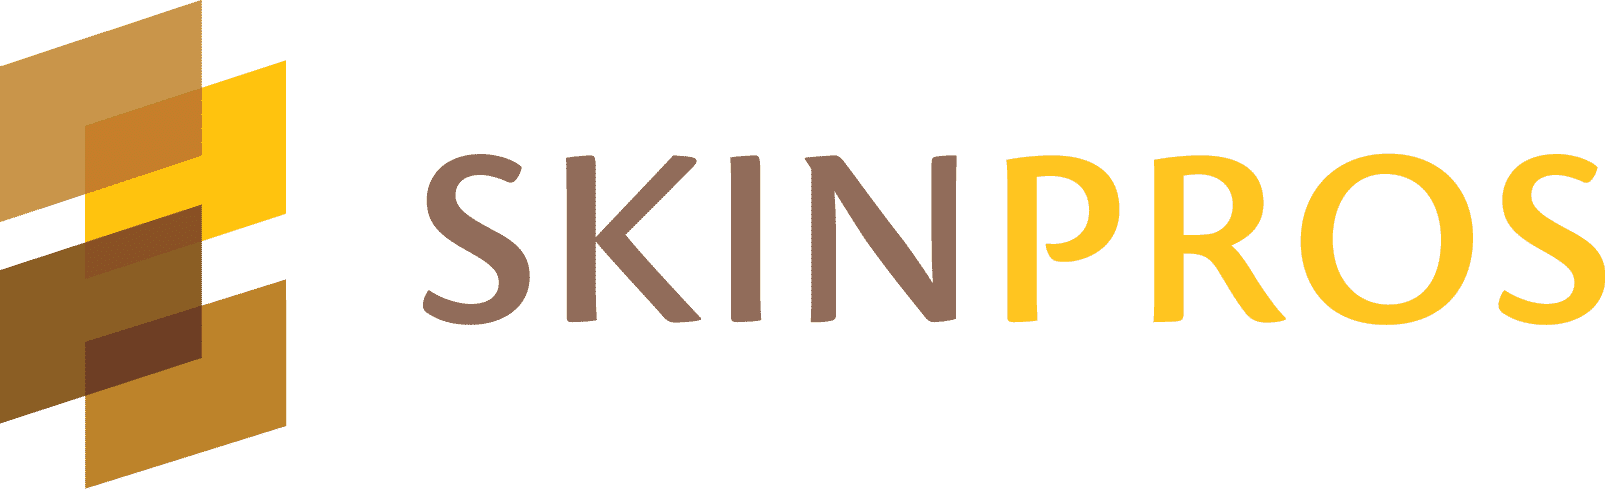 SkinPros logo design horizontal